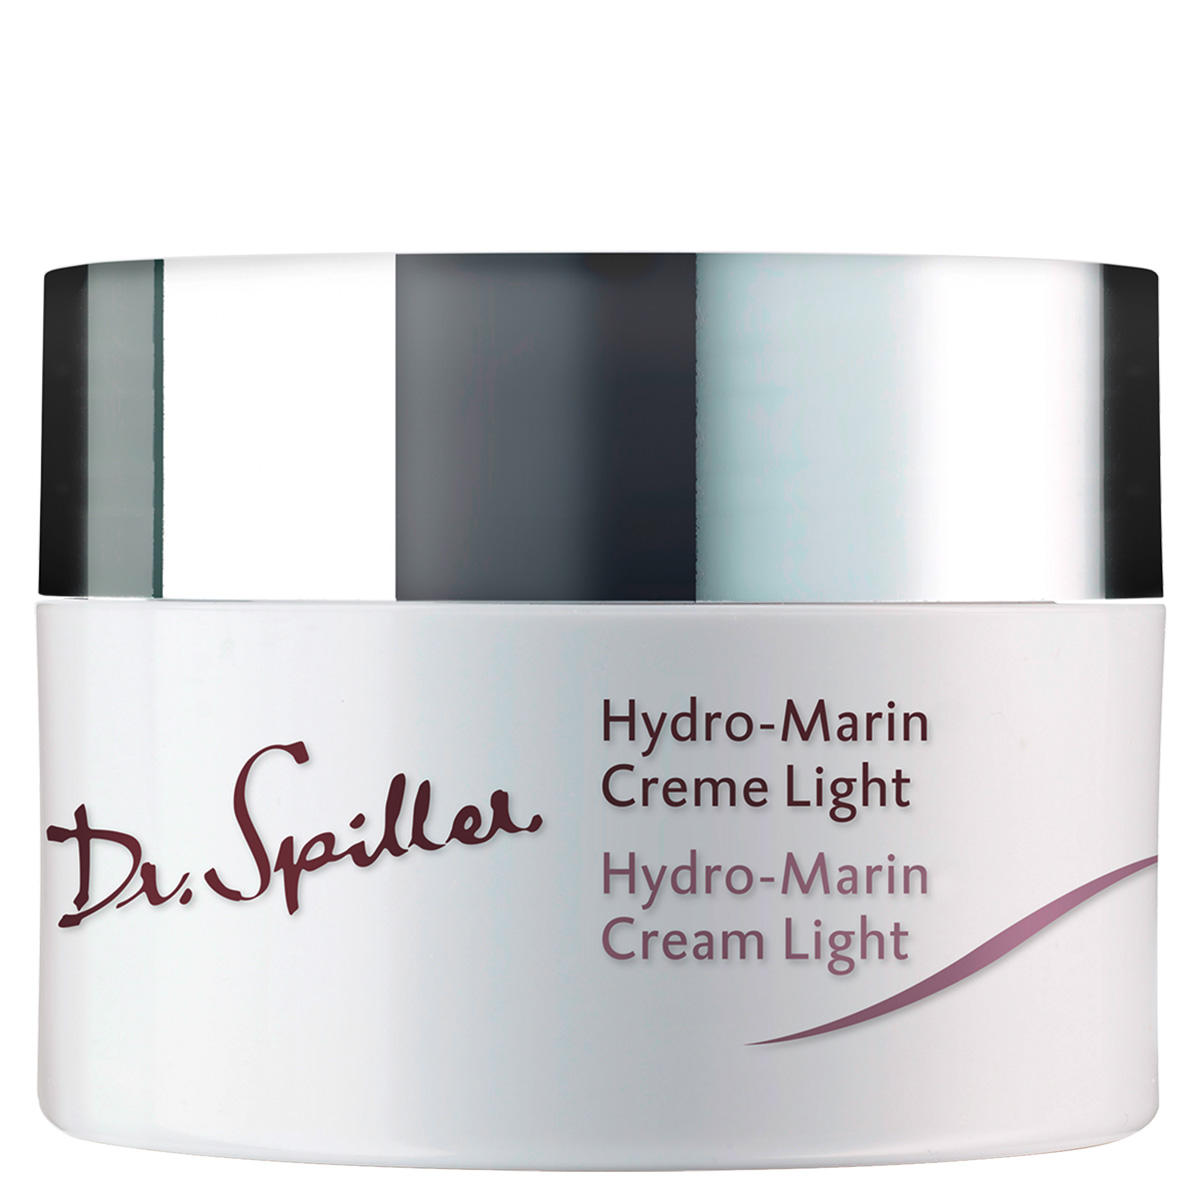 Dr. Spiller Biomimetic SkinCare Hydro-Marin Creme Light 50 ml - 1